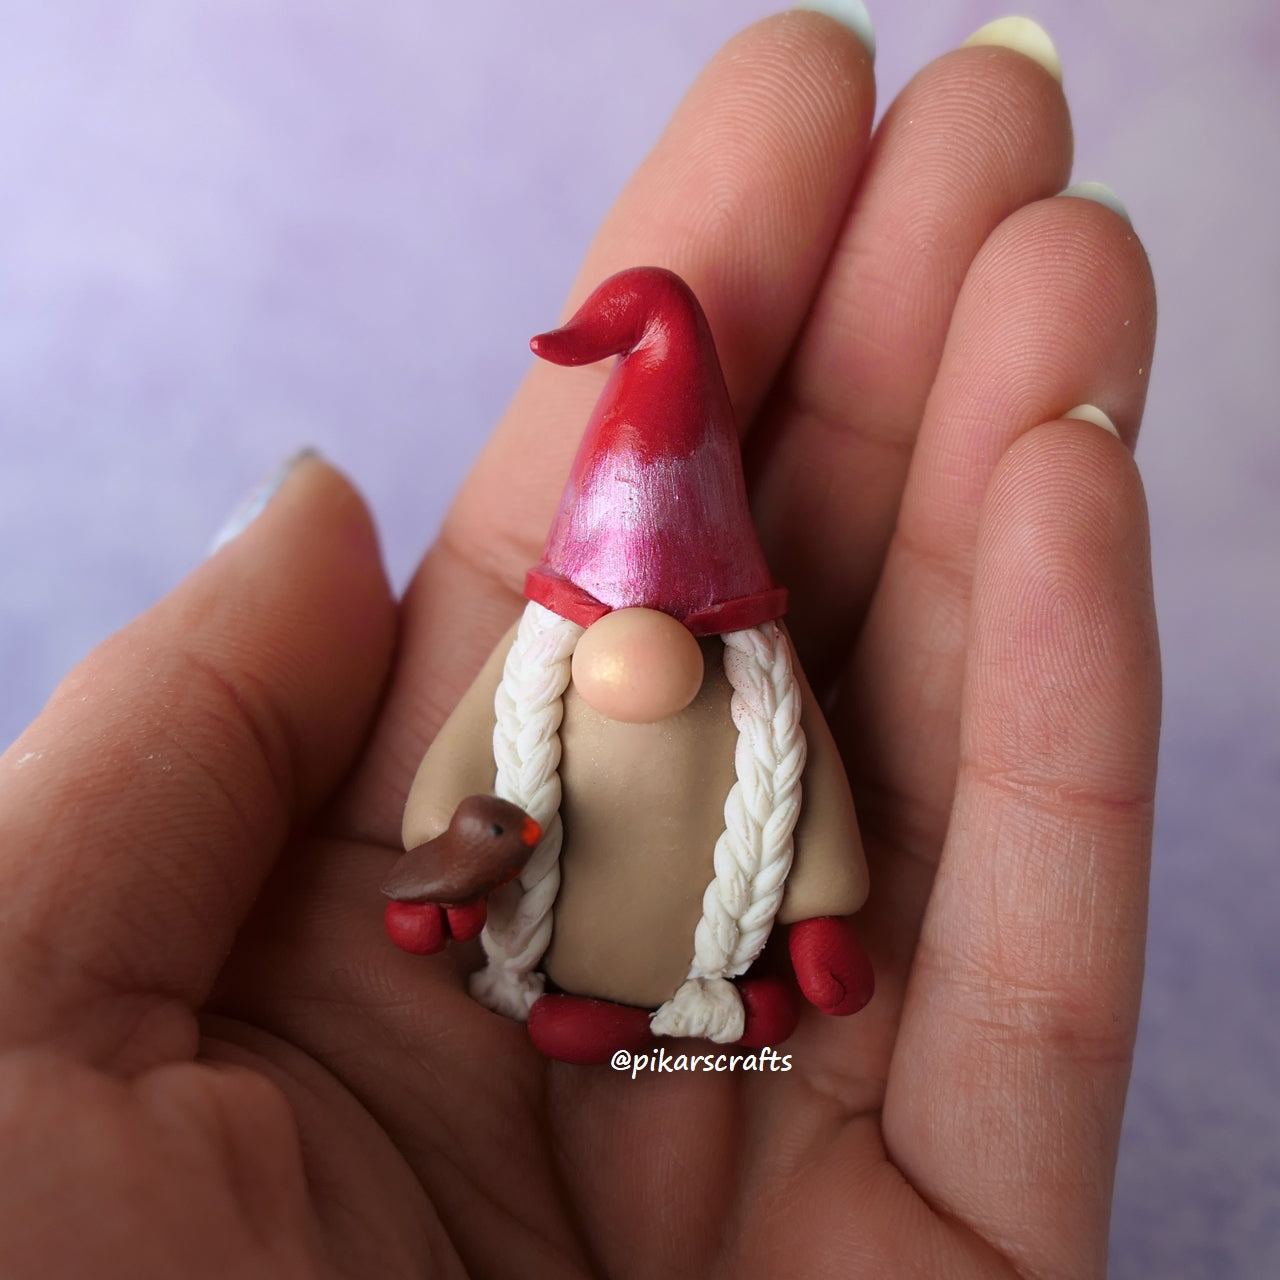 Miniature Christmas Gnome (Gonk) 'Angelina' with Robin Bird